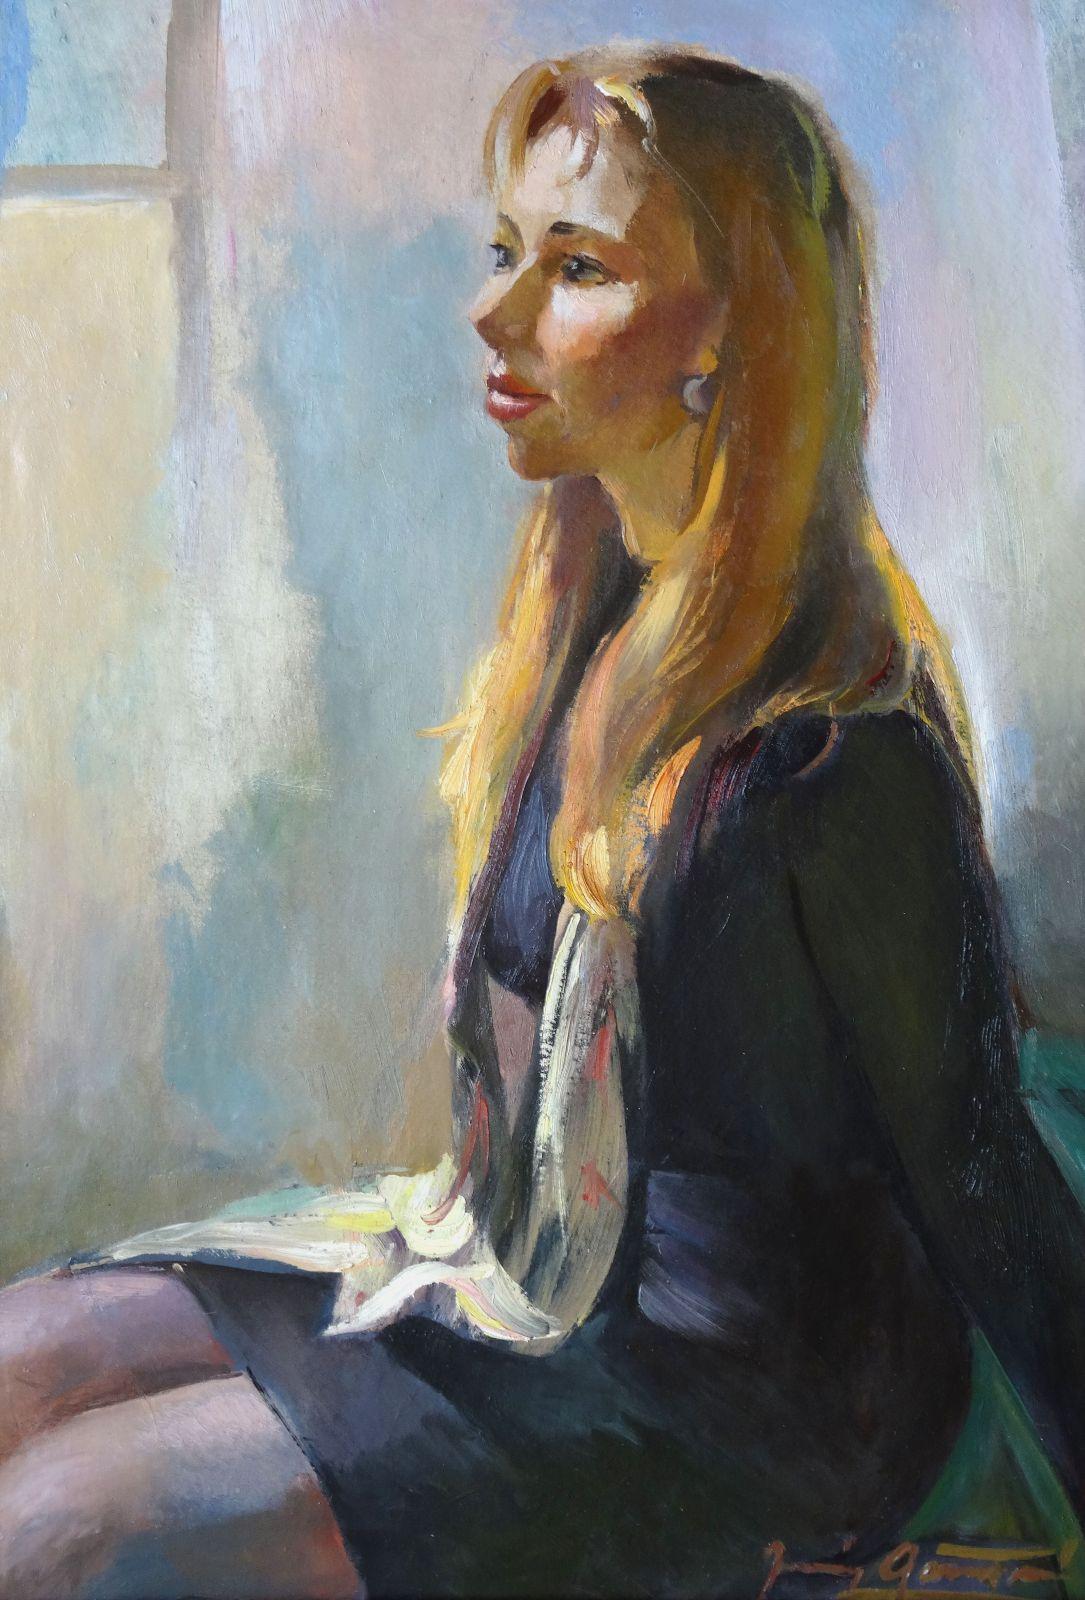 Girls portrait. Oil on canvas, 81x57 cm